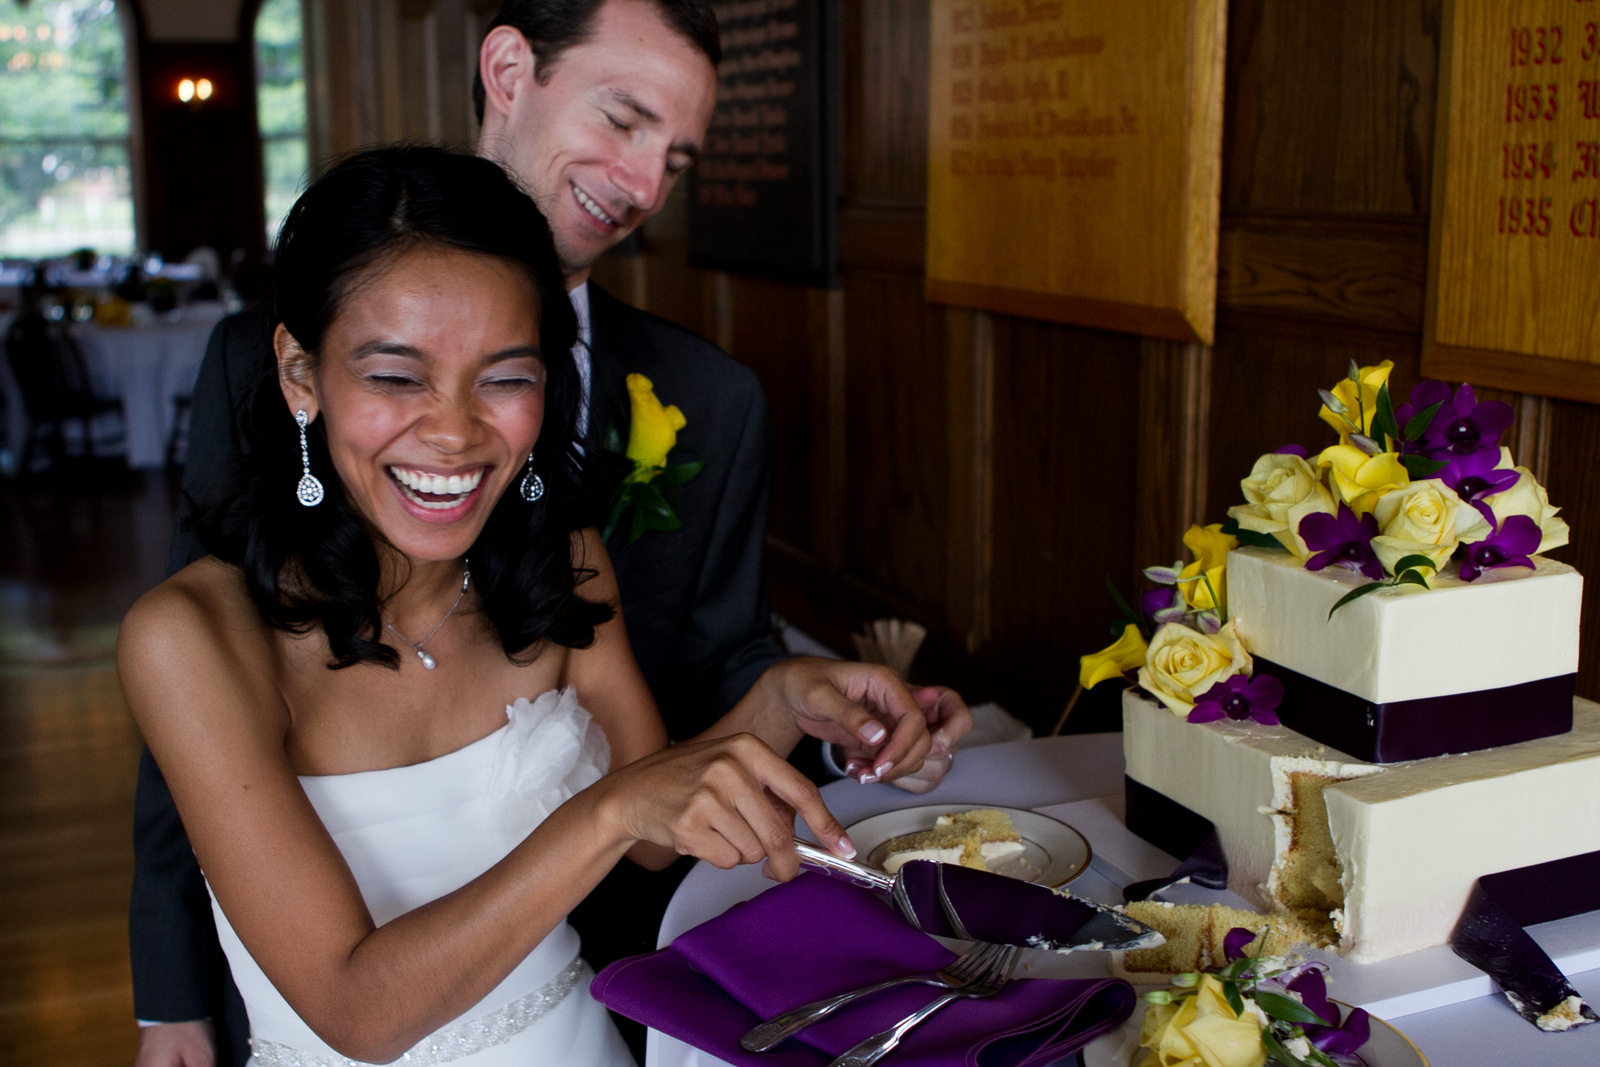 Judd-Rittler Wedding Reception - Photo by Brian Samuels Photography